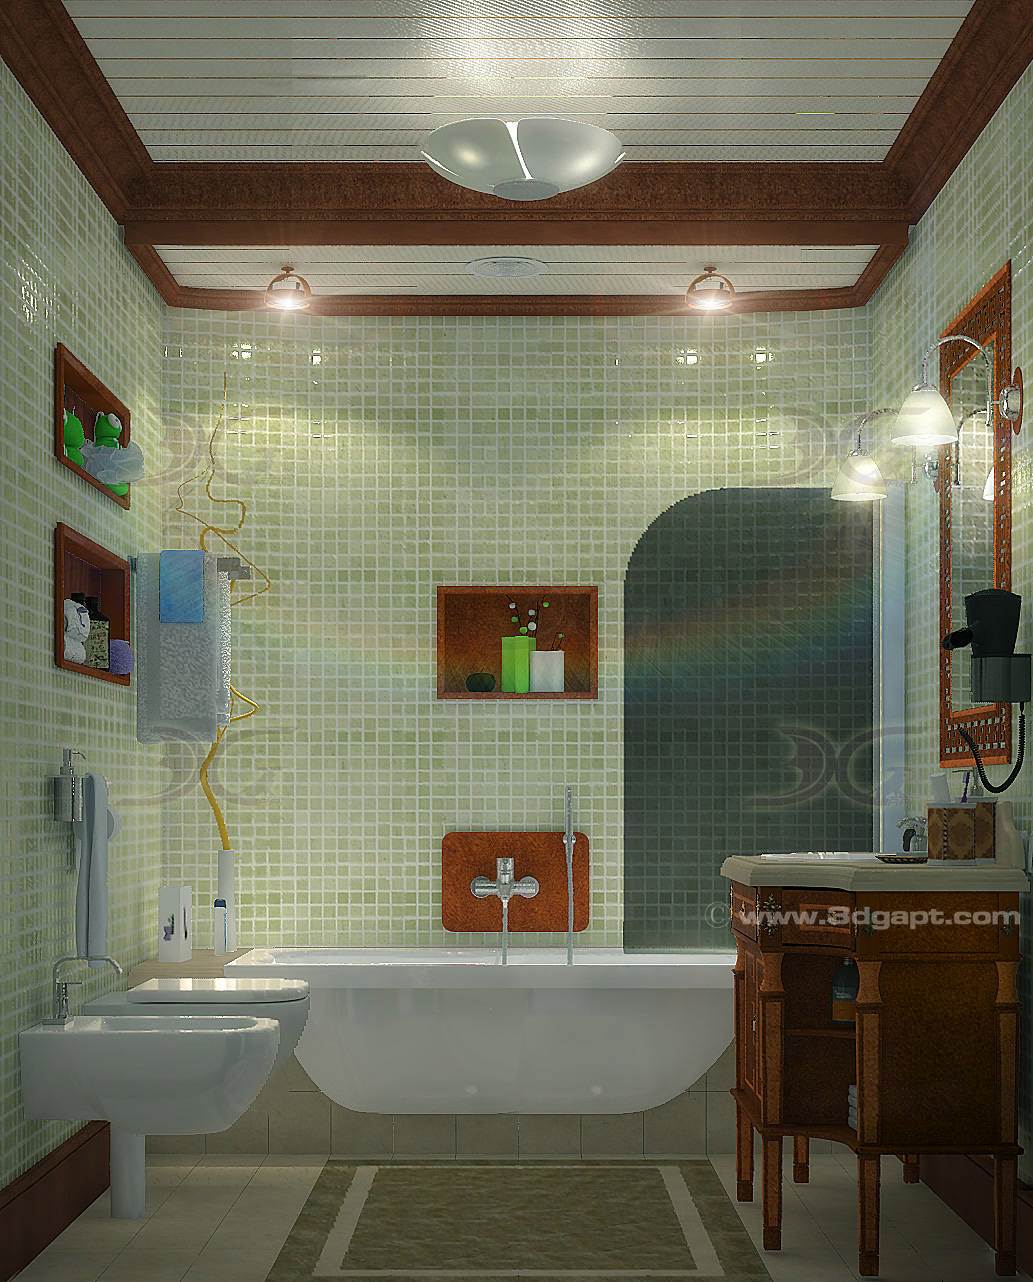 Architecture Interior Washing Room1 1